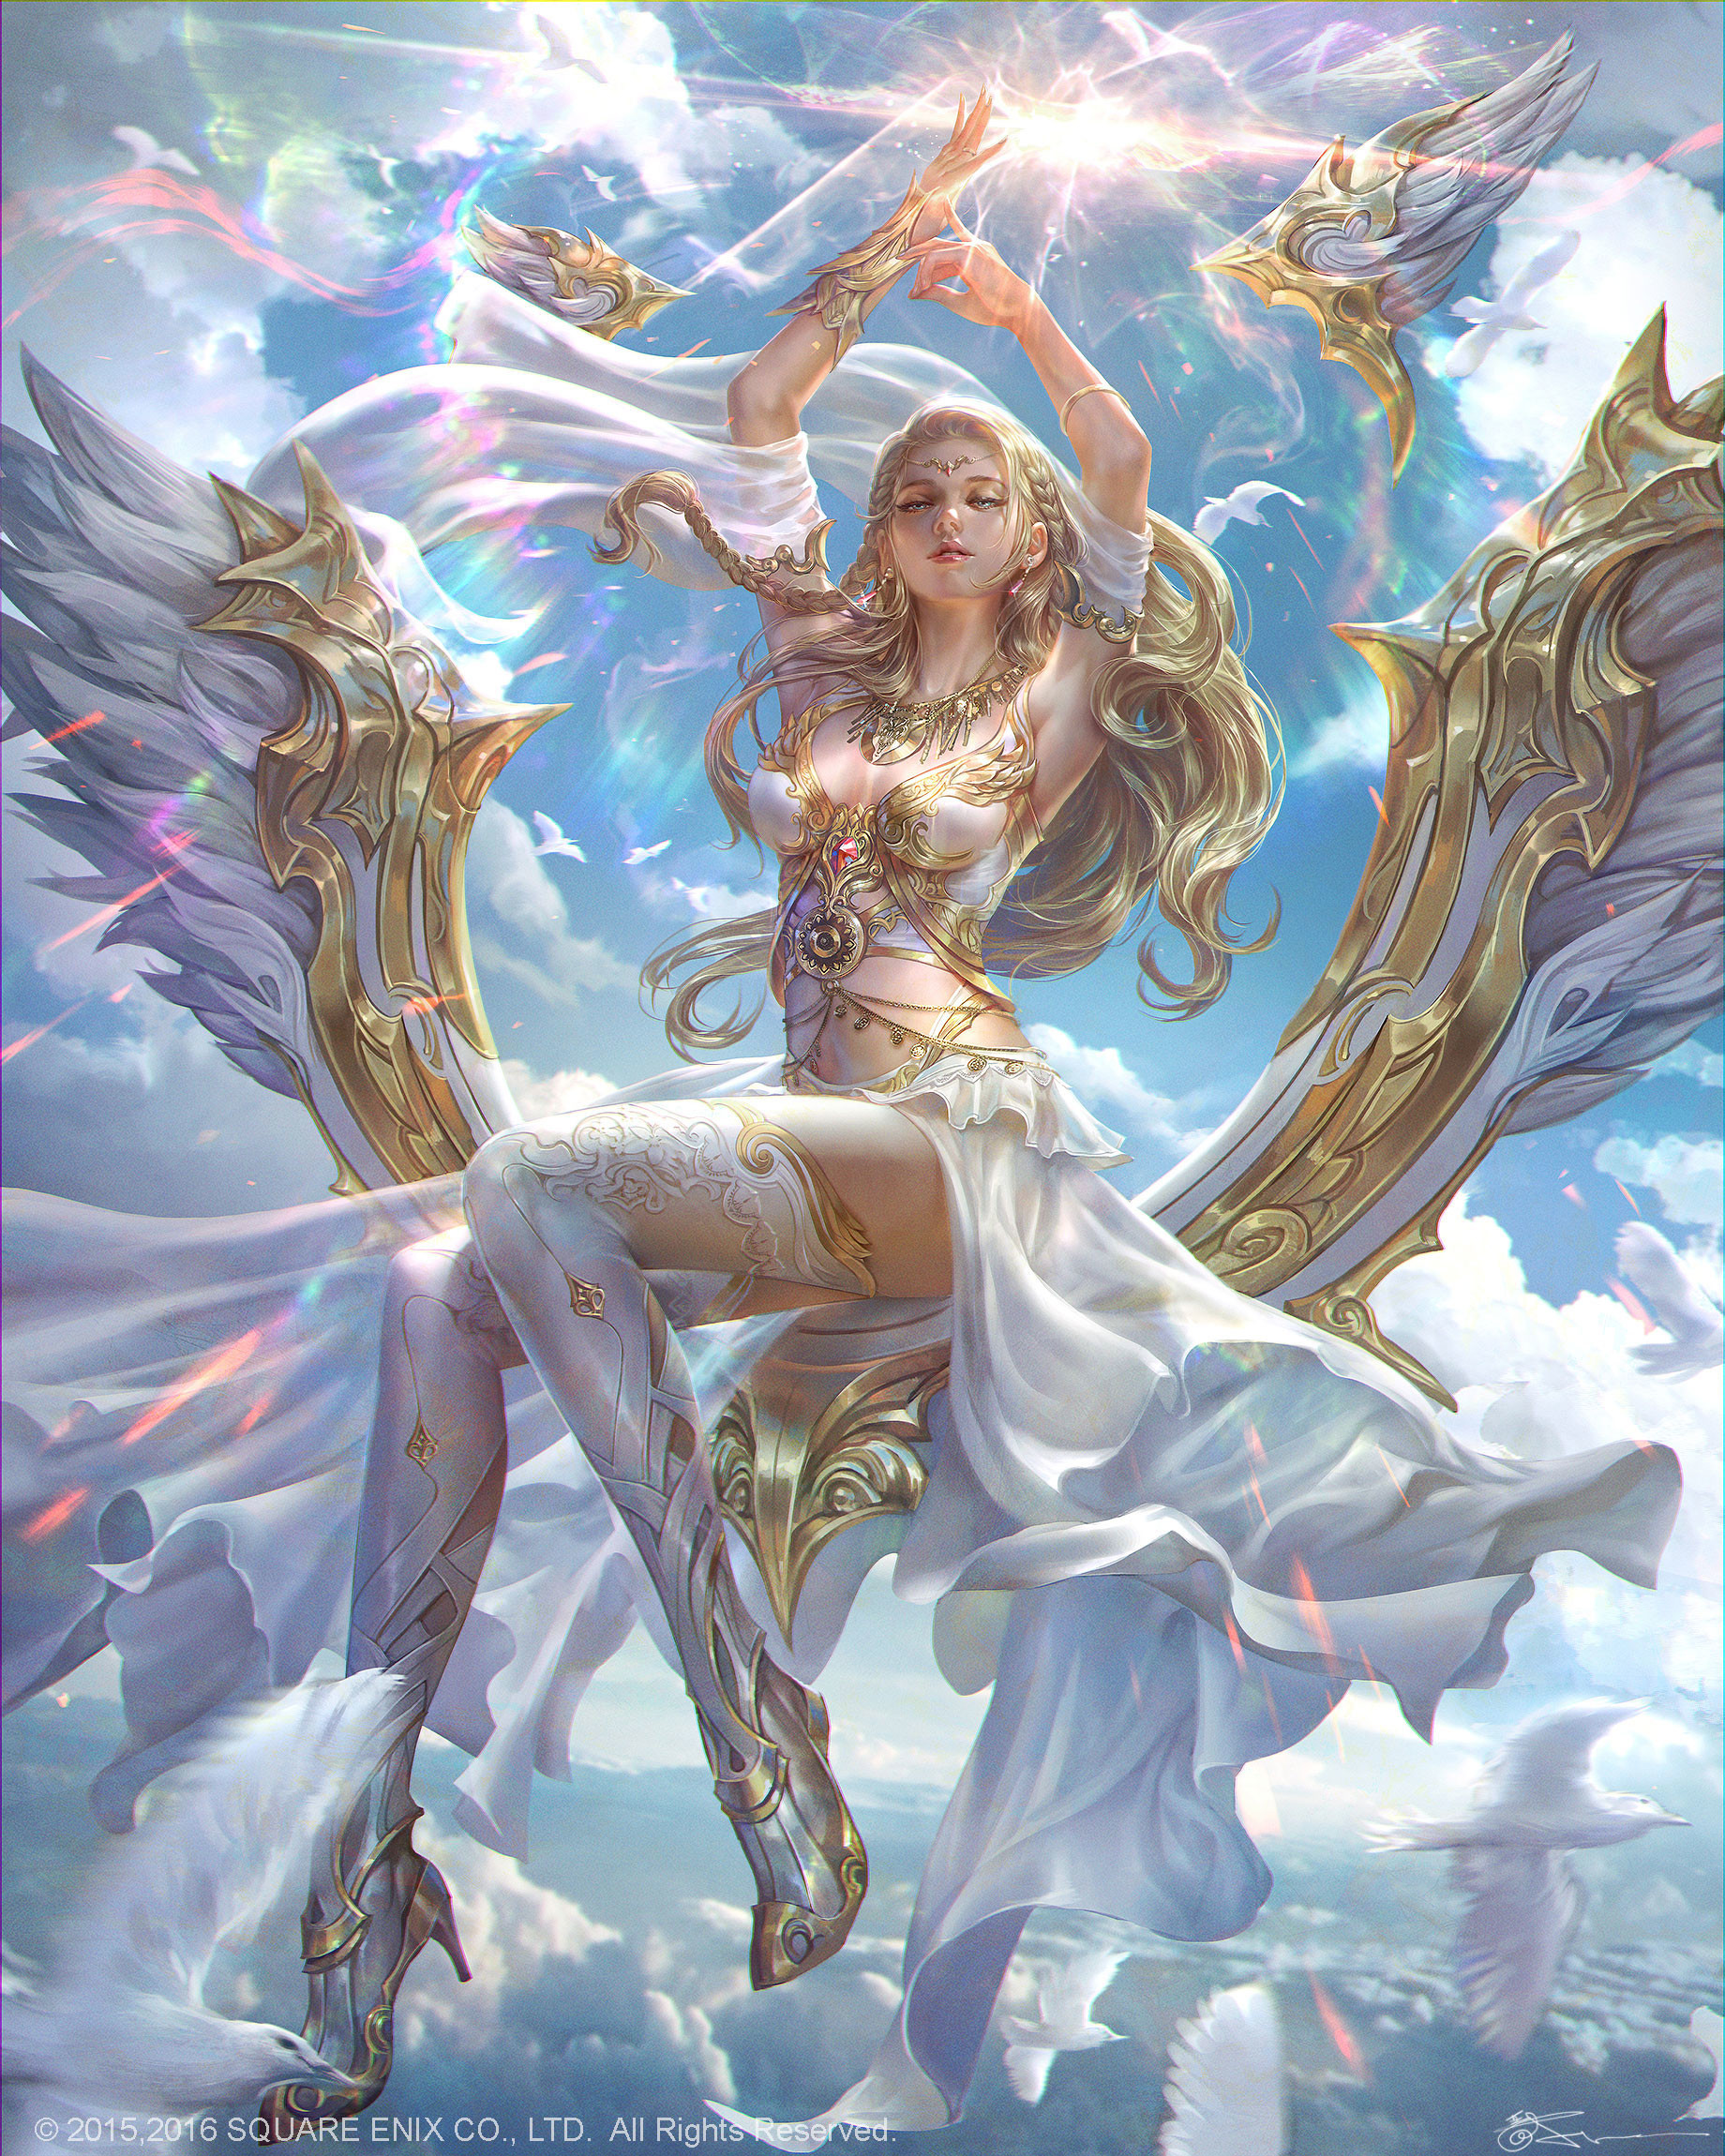 General 1840x2300 Jeremy Chong drawing women blonde long hair clouds rainbows wings angel fantasy art sky